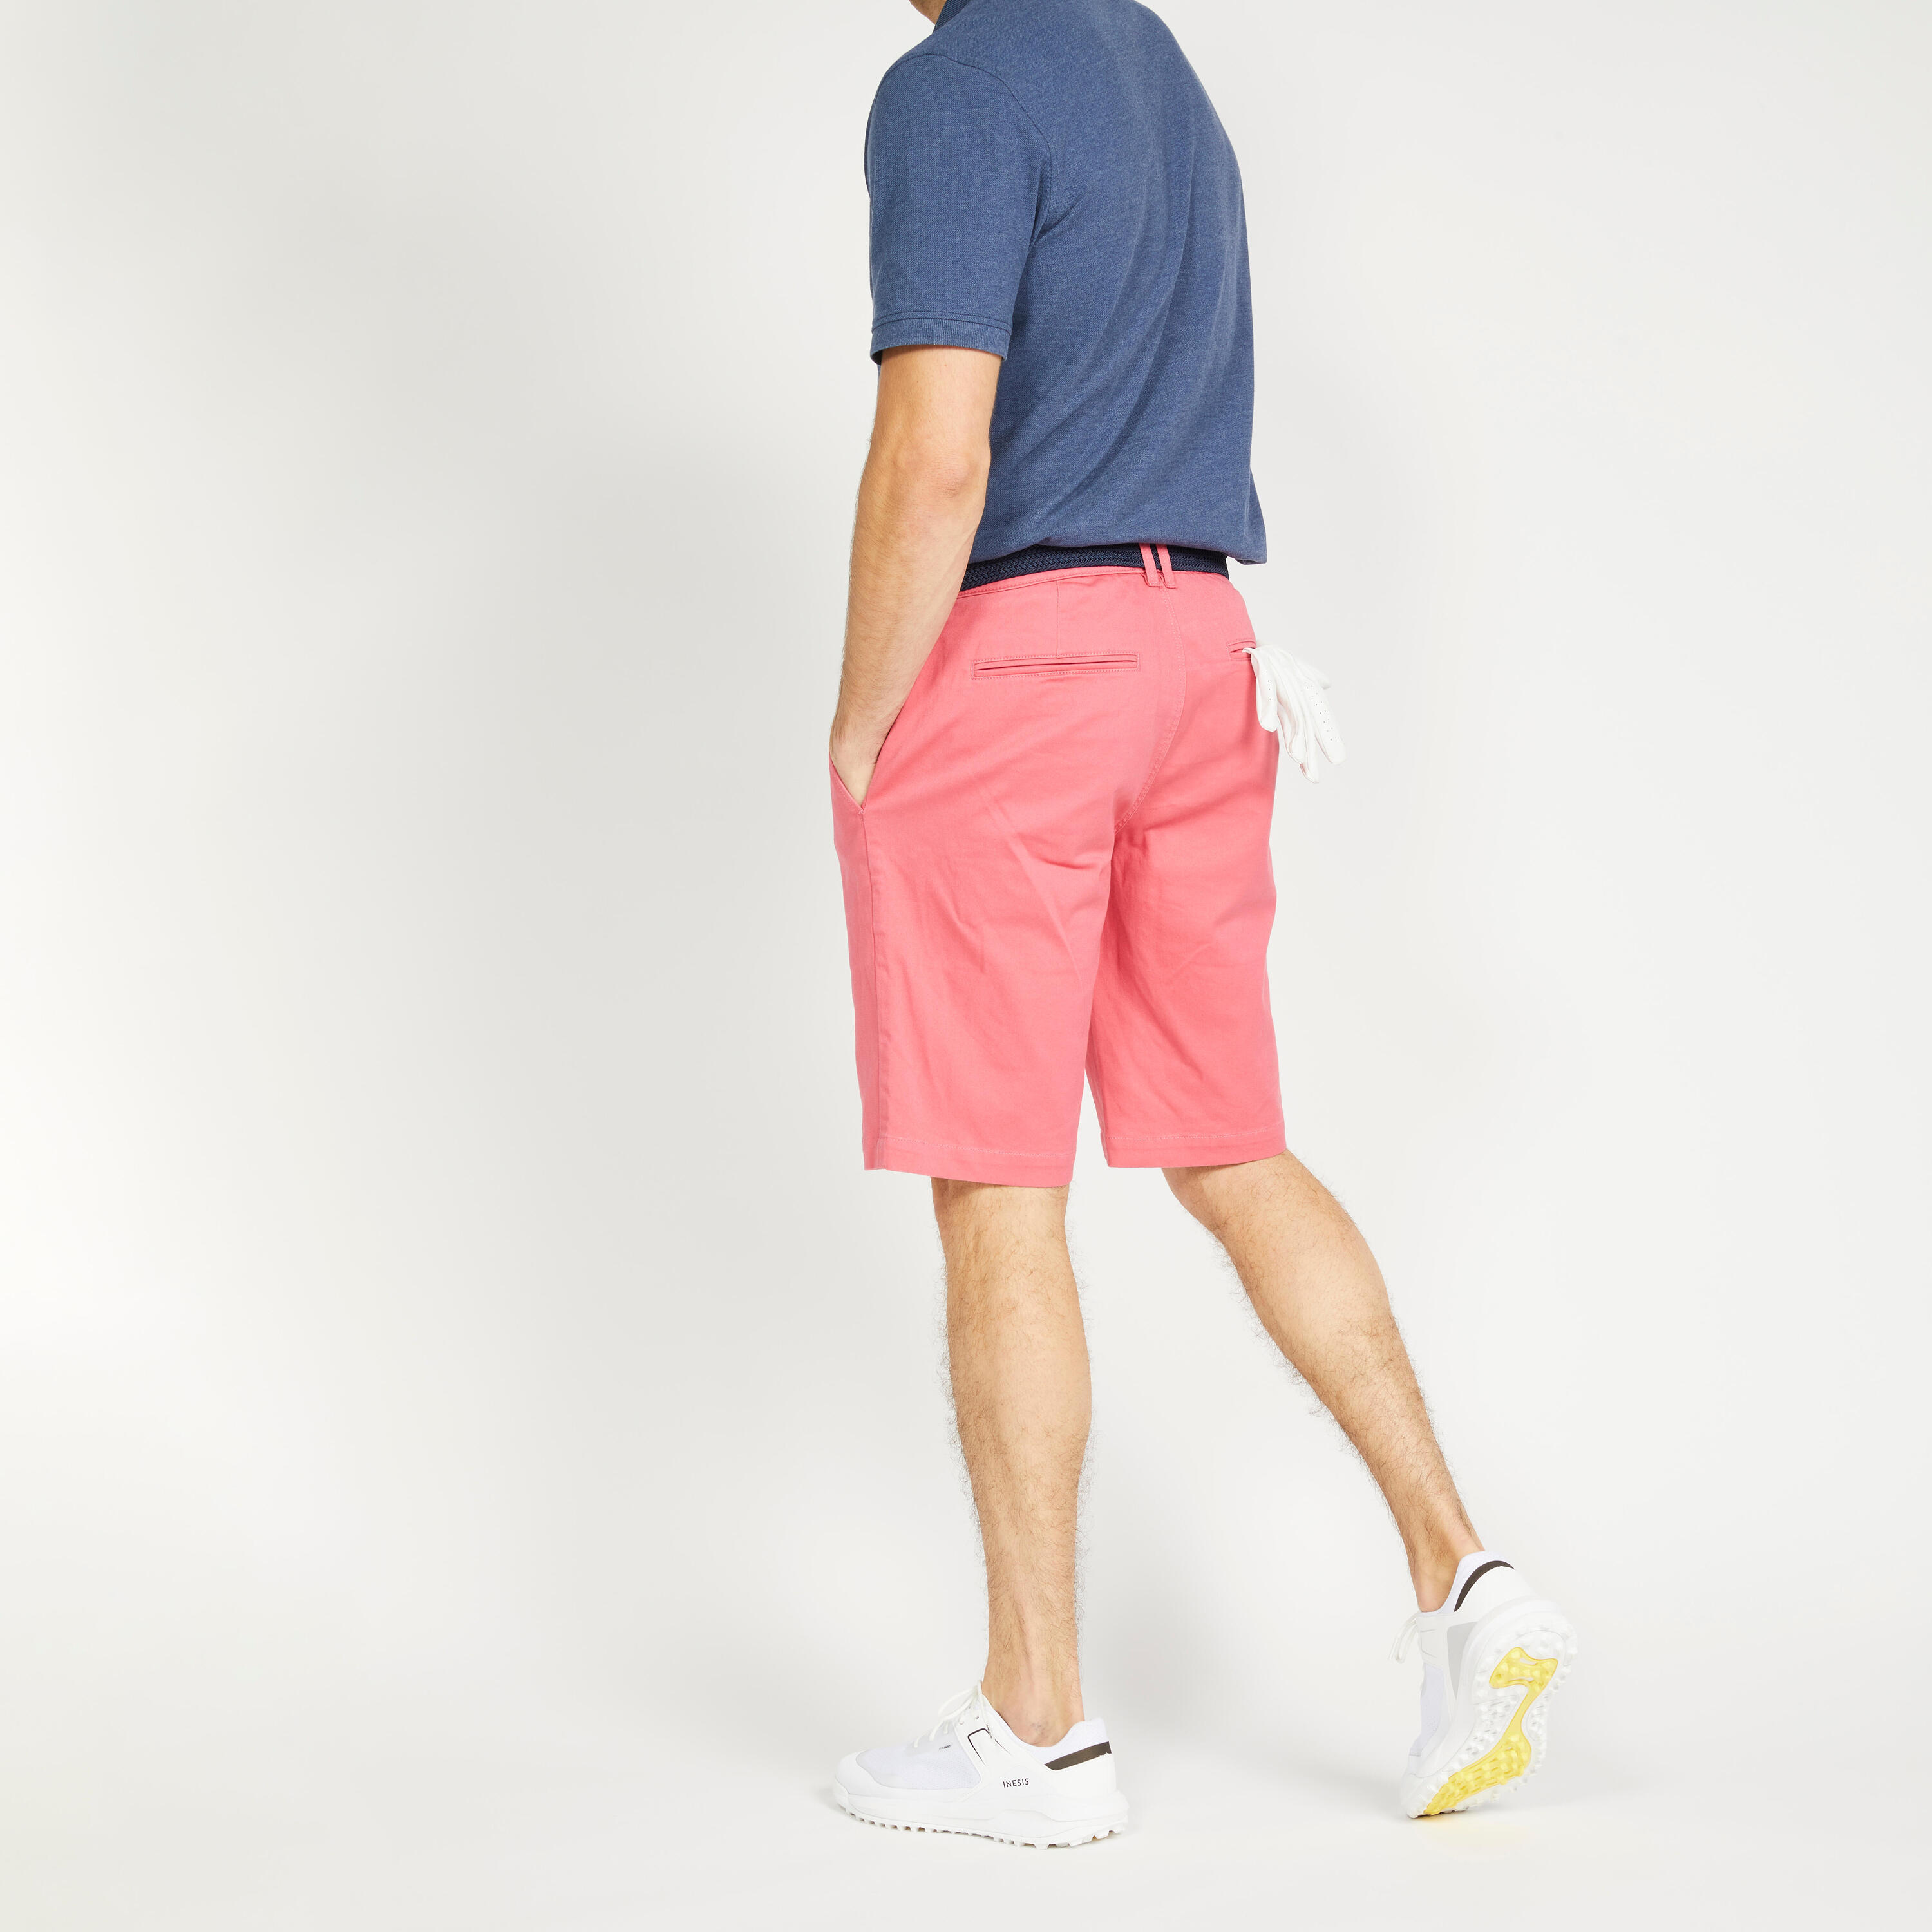 Men's Golf Chino Shorts - MW500 Pink 2/6